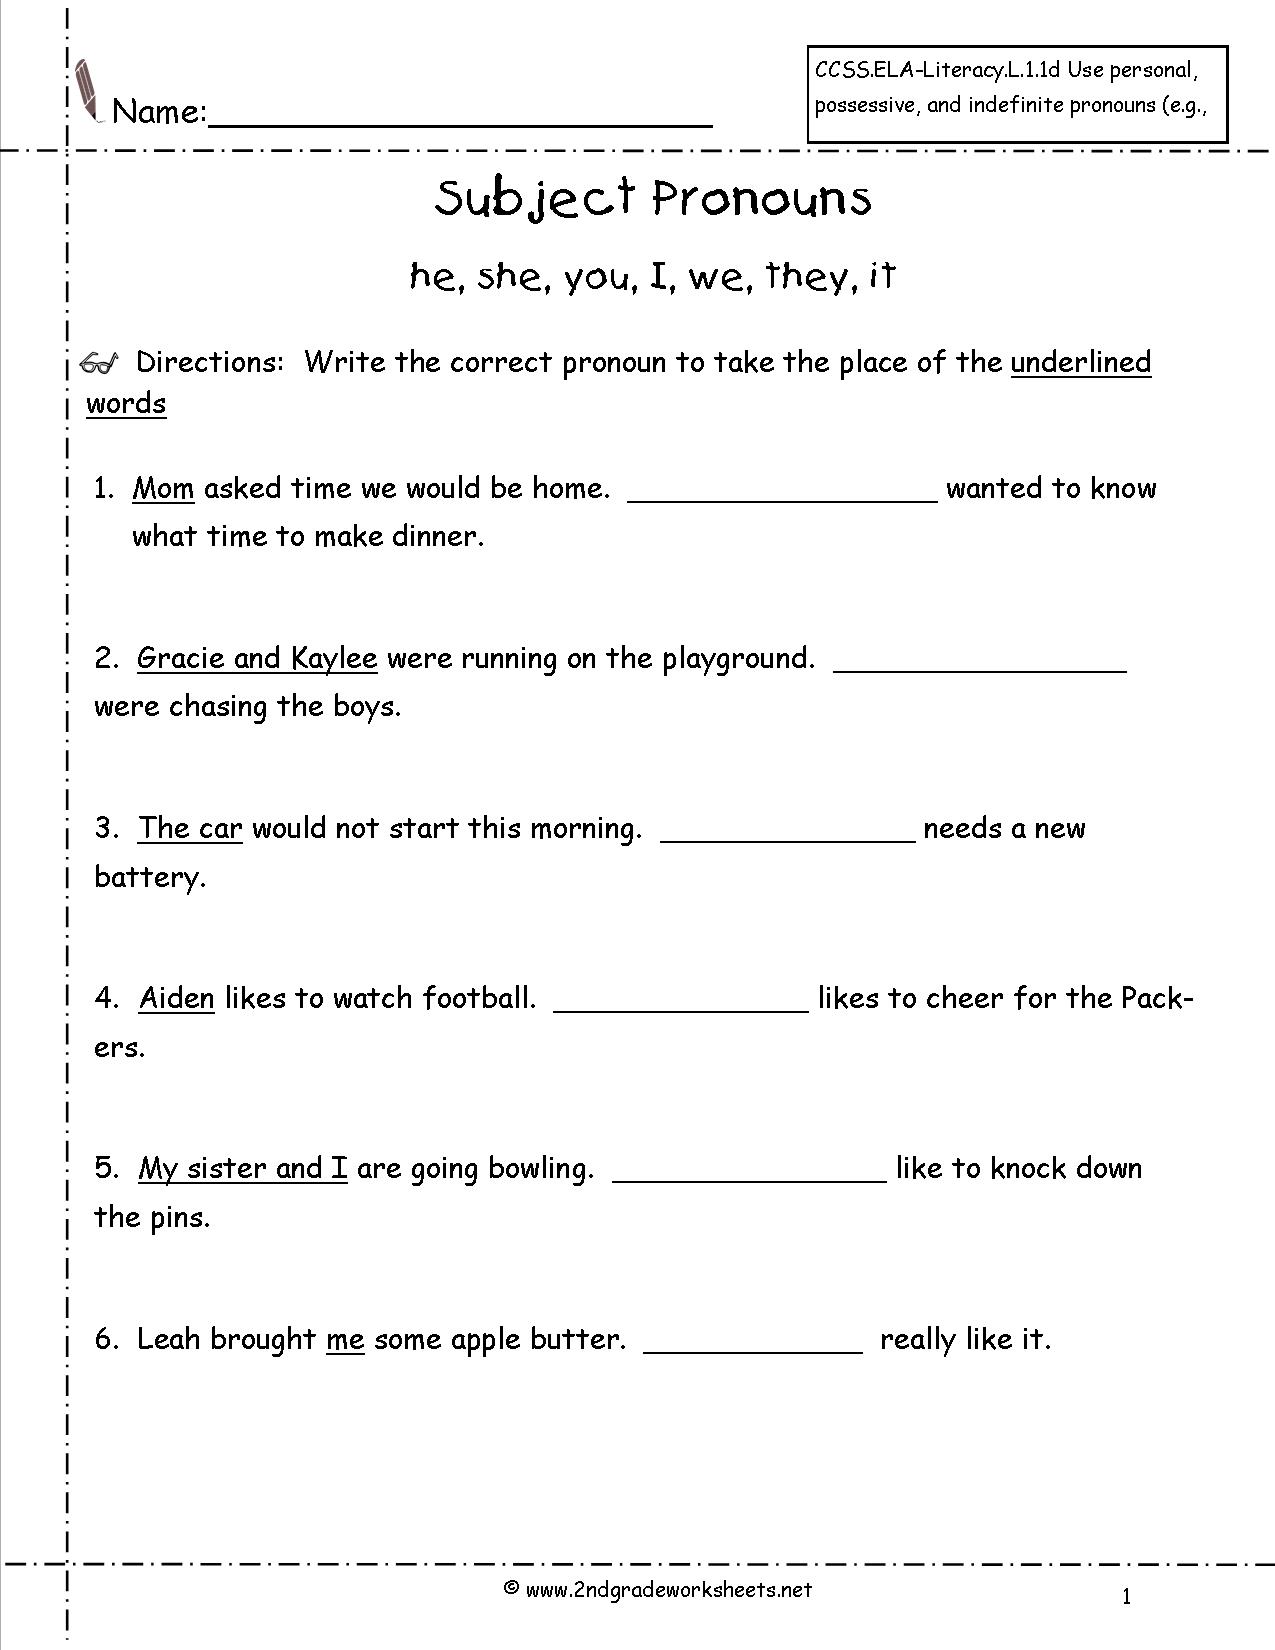 12-best-images-of-nouns-and-pronouns-worksheets-grade-2-possessive-pronouns-worksheet-plural